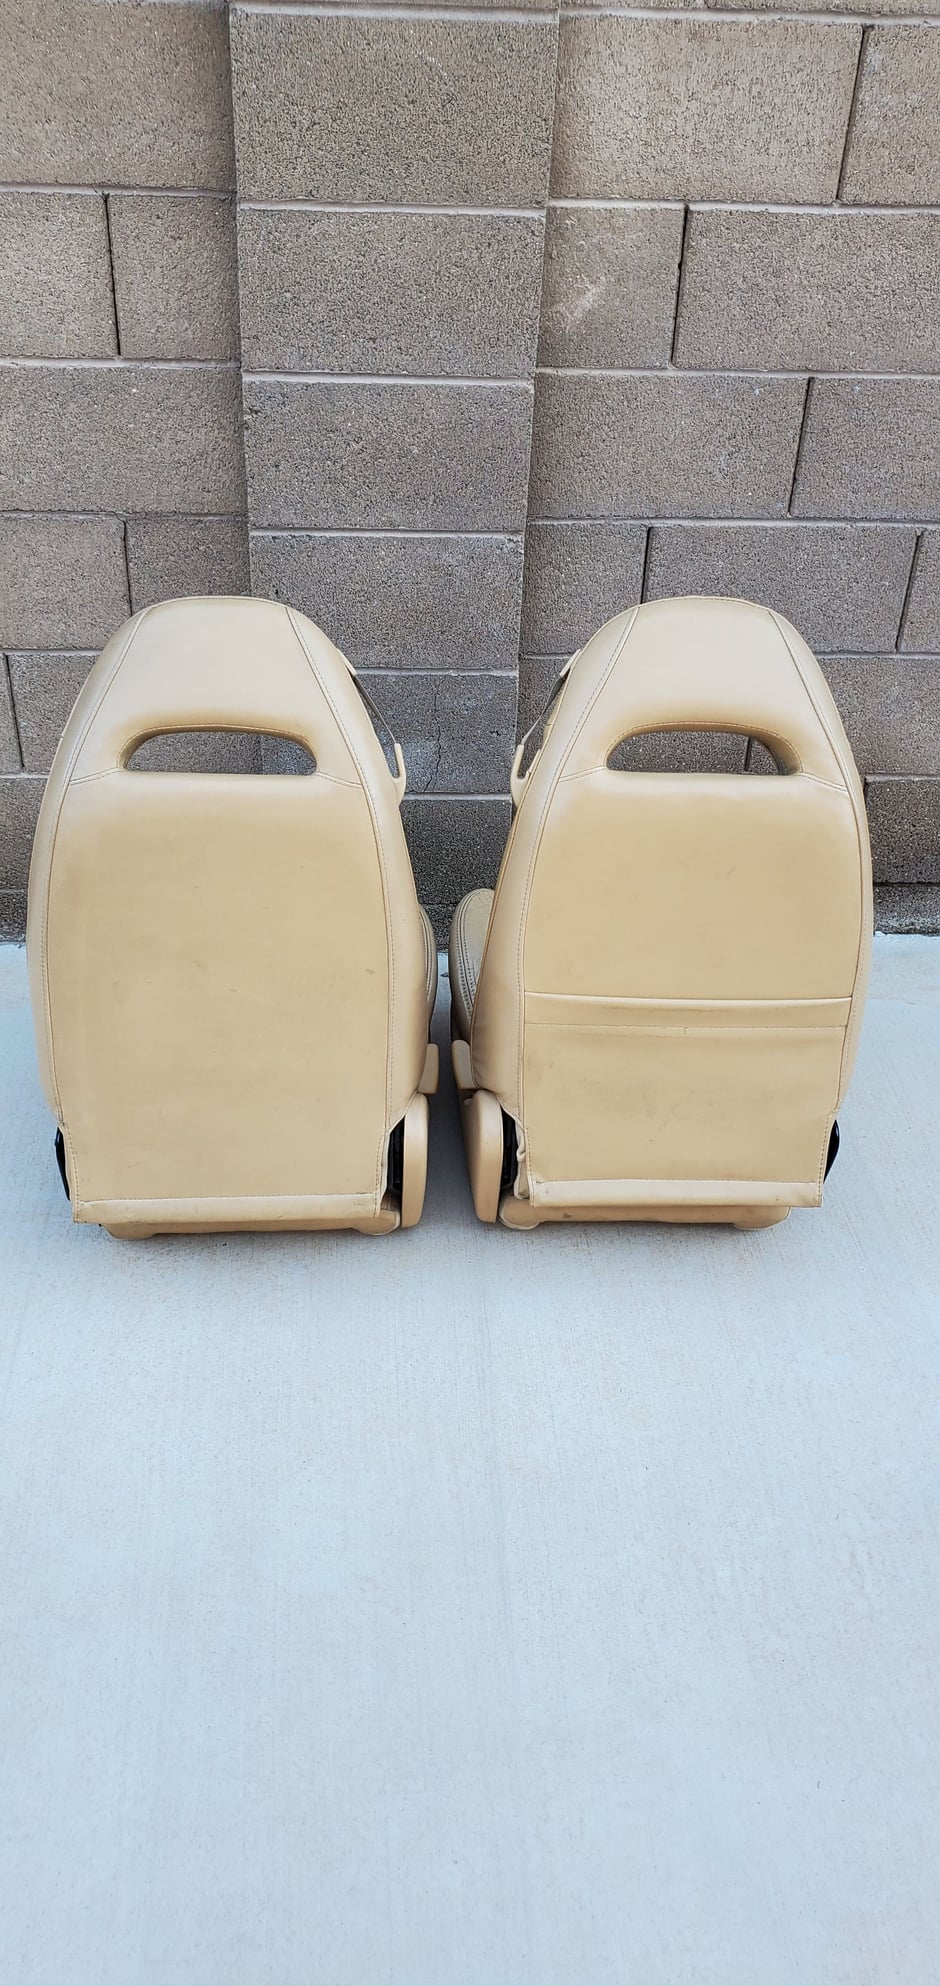 Interior/Upholstery - Tan 1993 FD Seats - Used - 1993 to 2002 Mazda RX-7 - Yuma, AZ 85364, United States